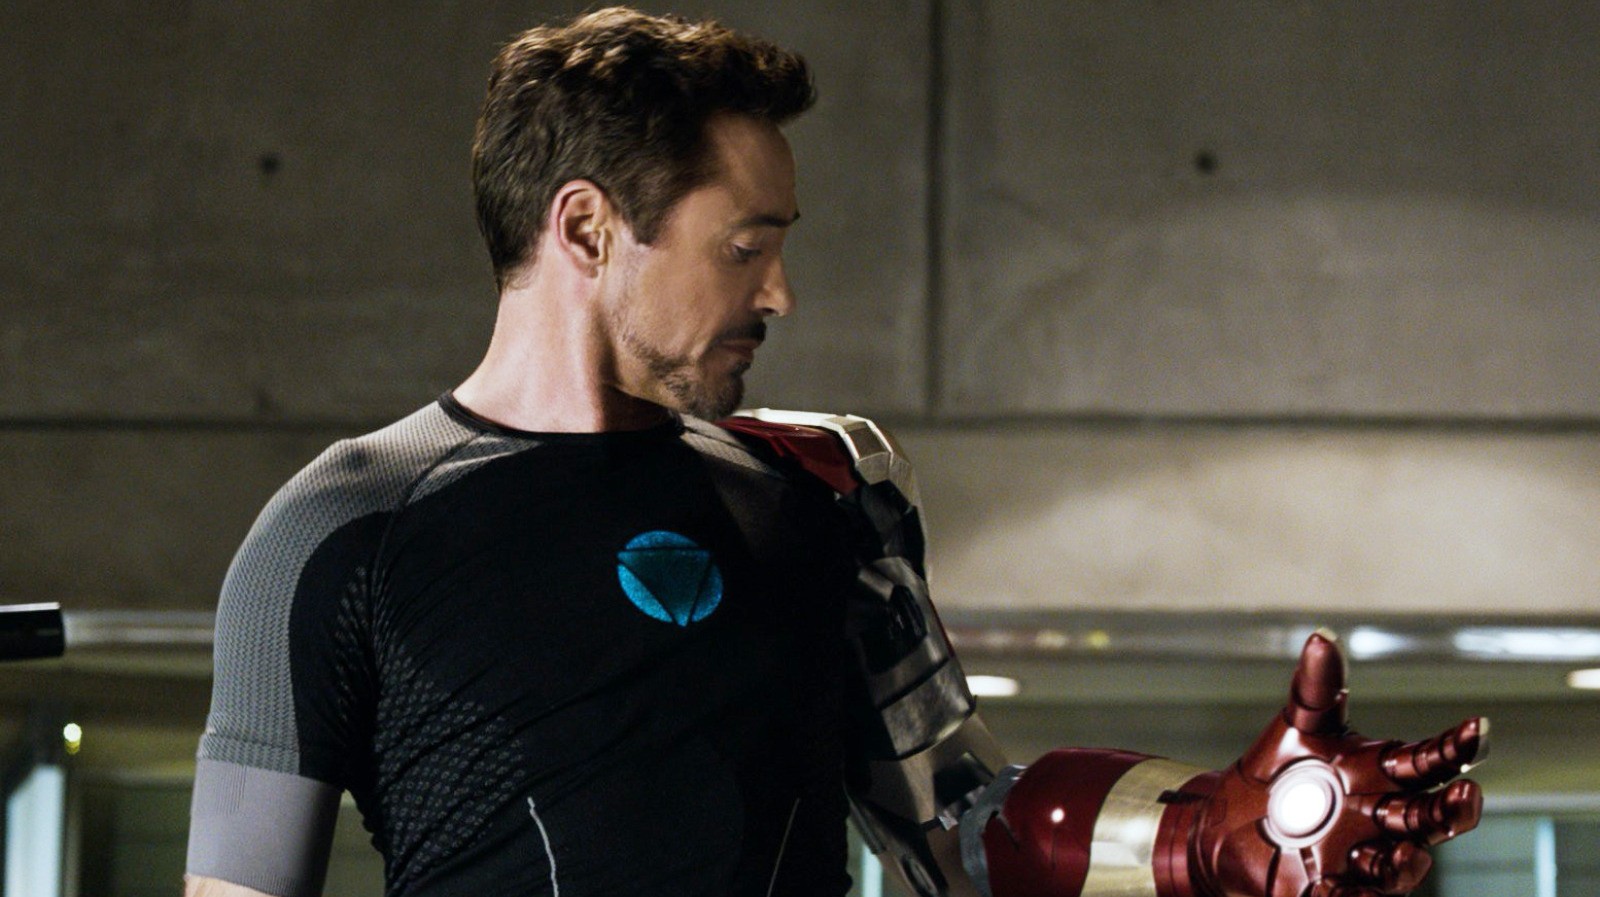 Robert Downey Jr. as Tony Stark, aka Iron Man 